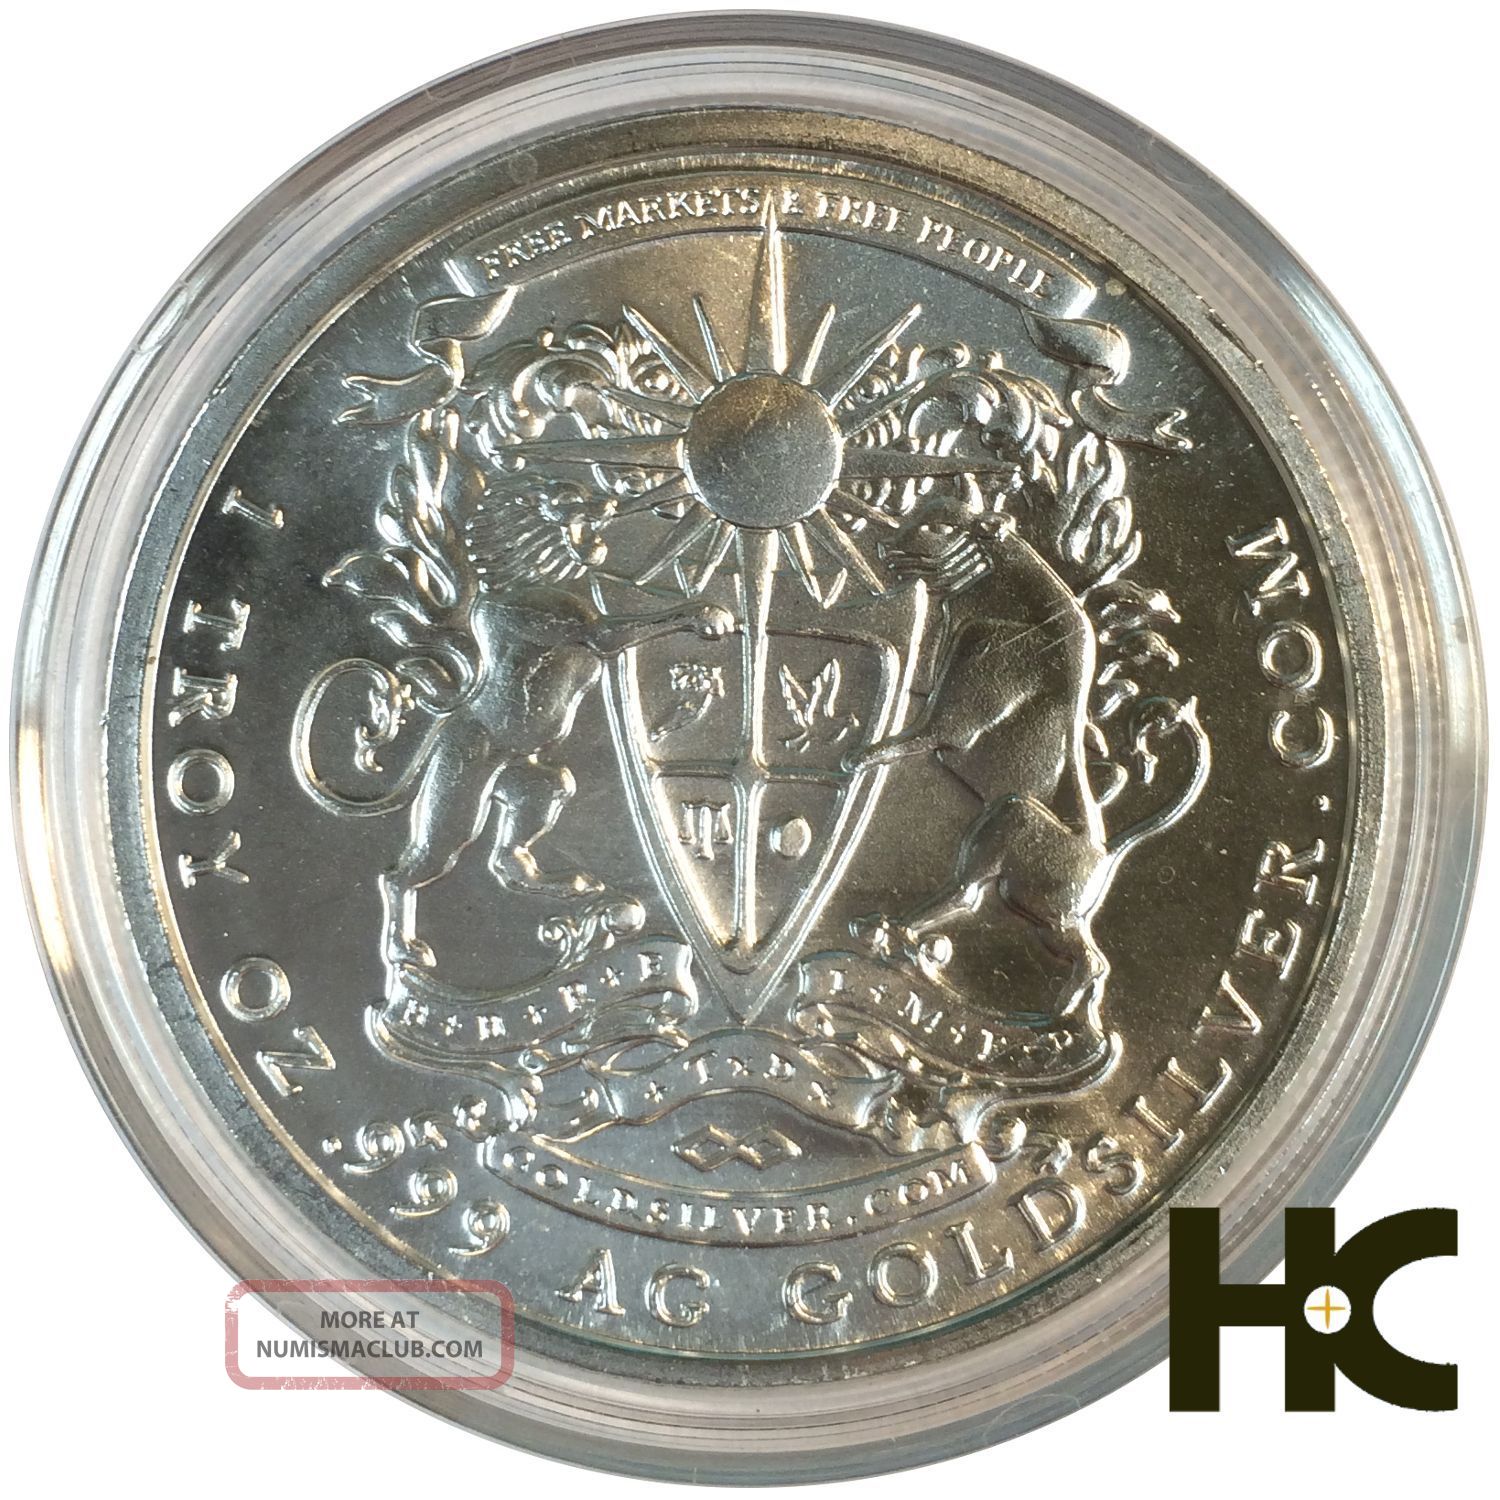 Encapsulated 1 Oz Silver Pegasus Medallion. . 999 Fine Silver Round.